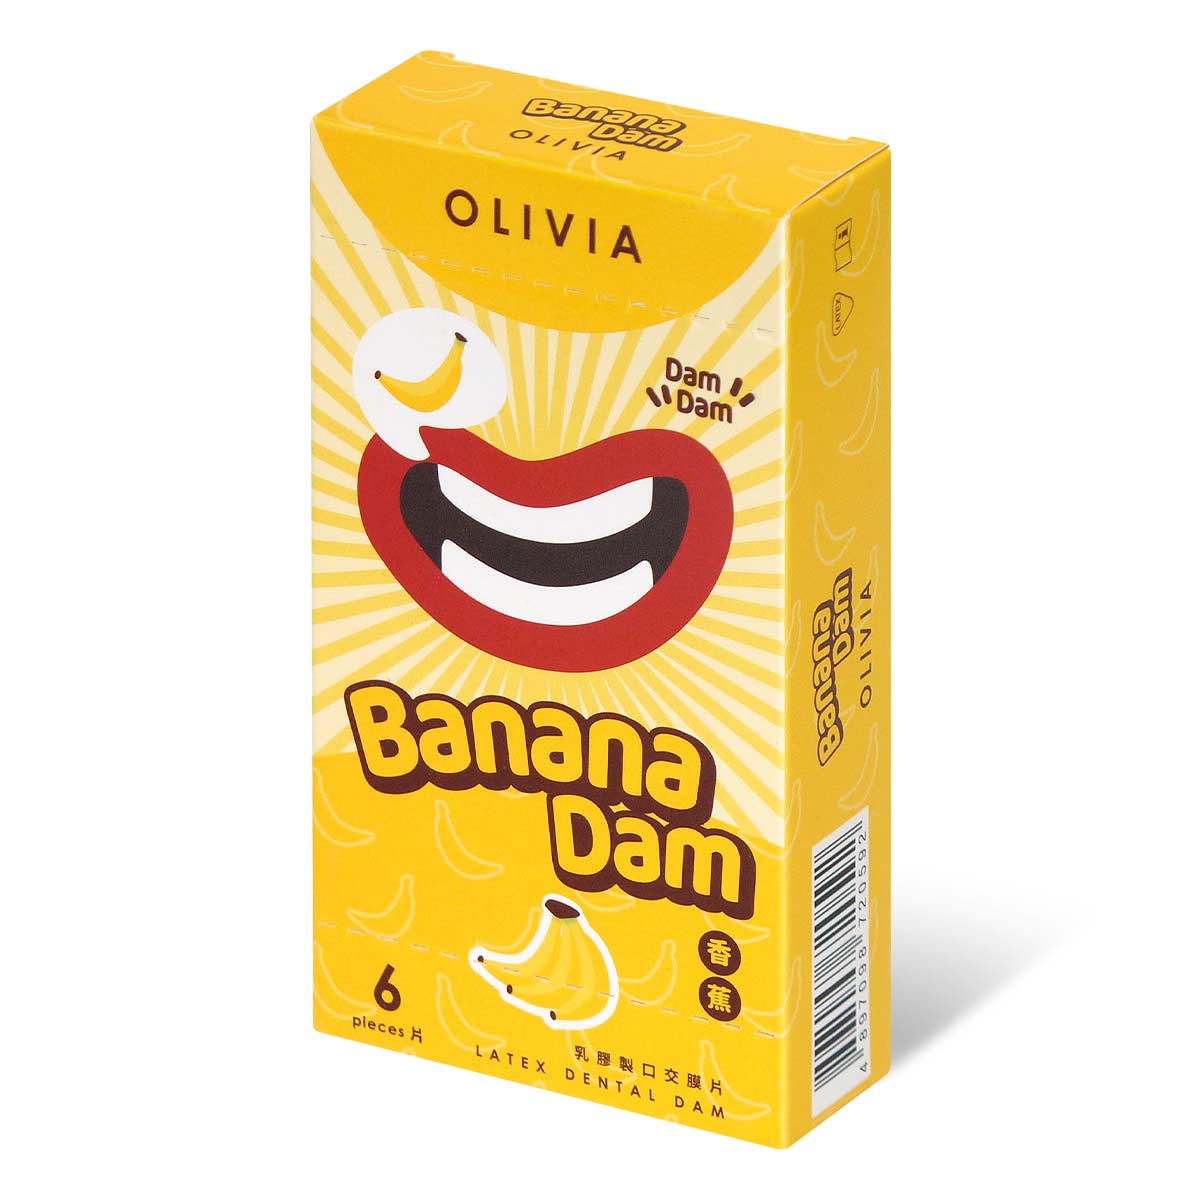 Olivia Banana Scent 6's Pack Latex Dental Dam-p_1